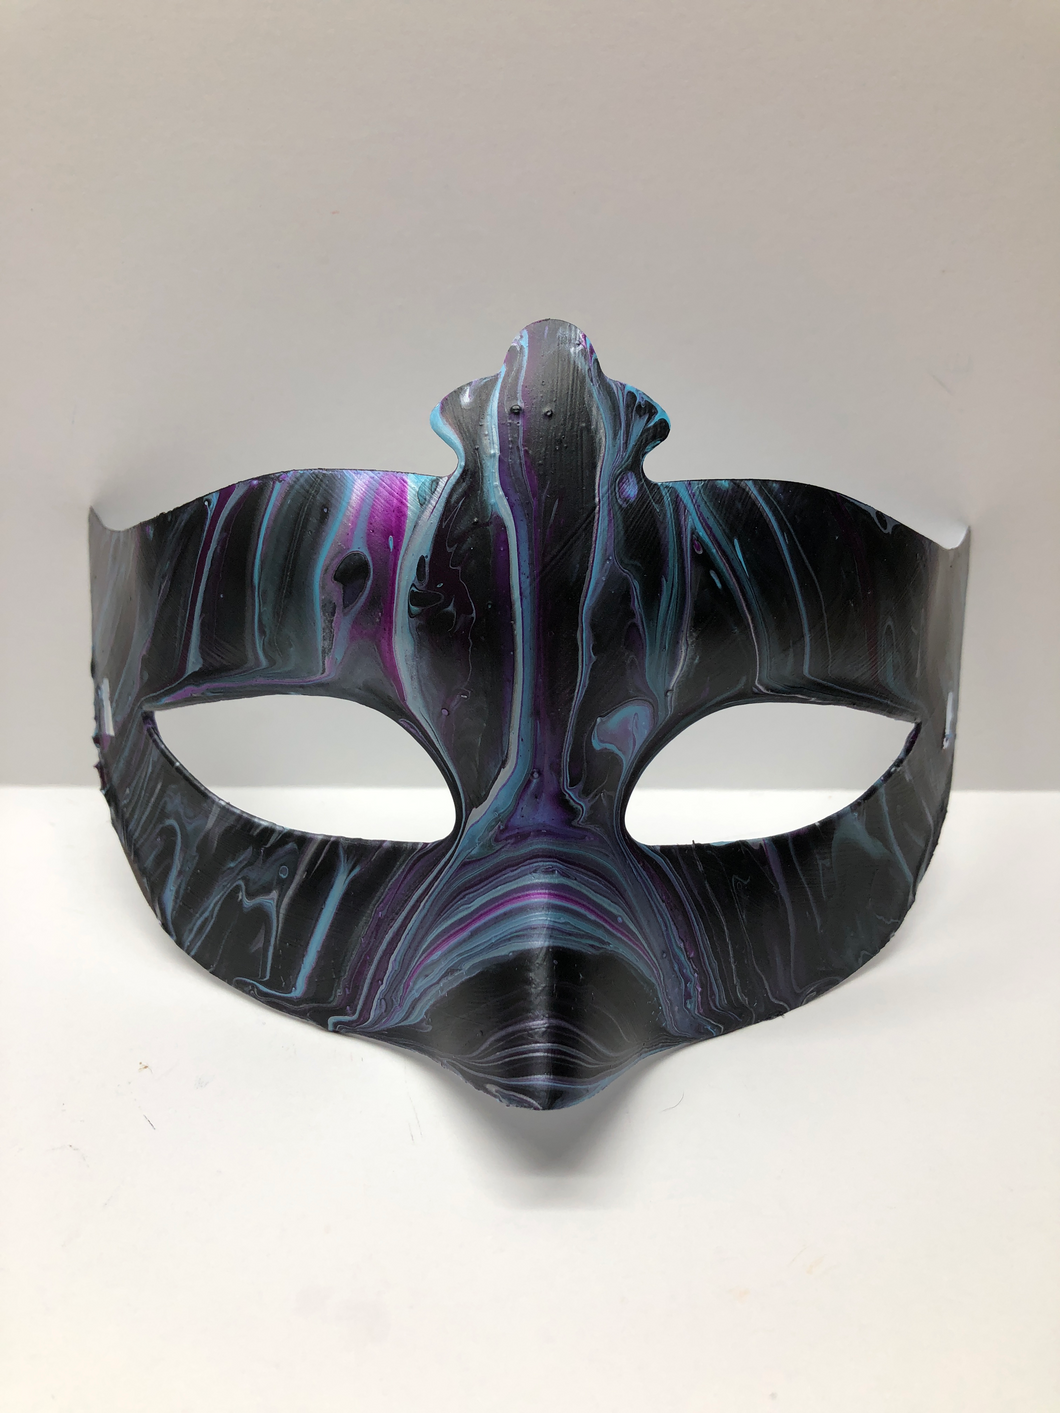  Black, blue, purple mask